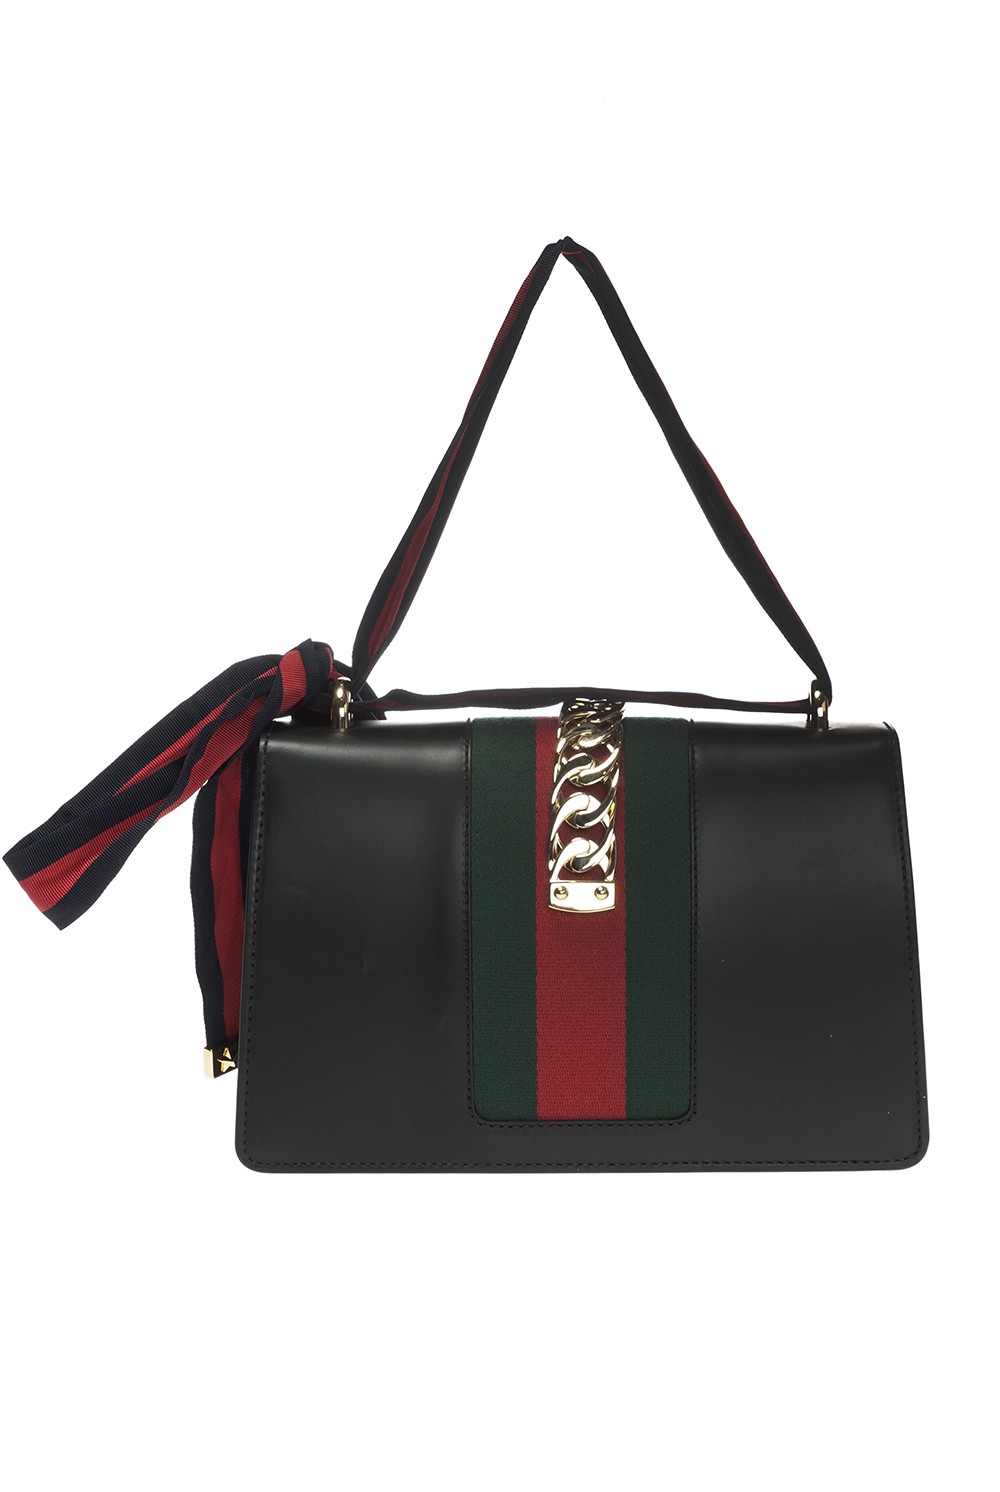 Gucci Black Leather Sylvie Shoulder Bag Gucci